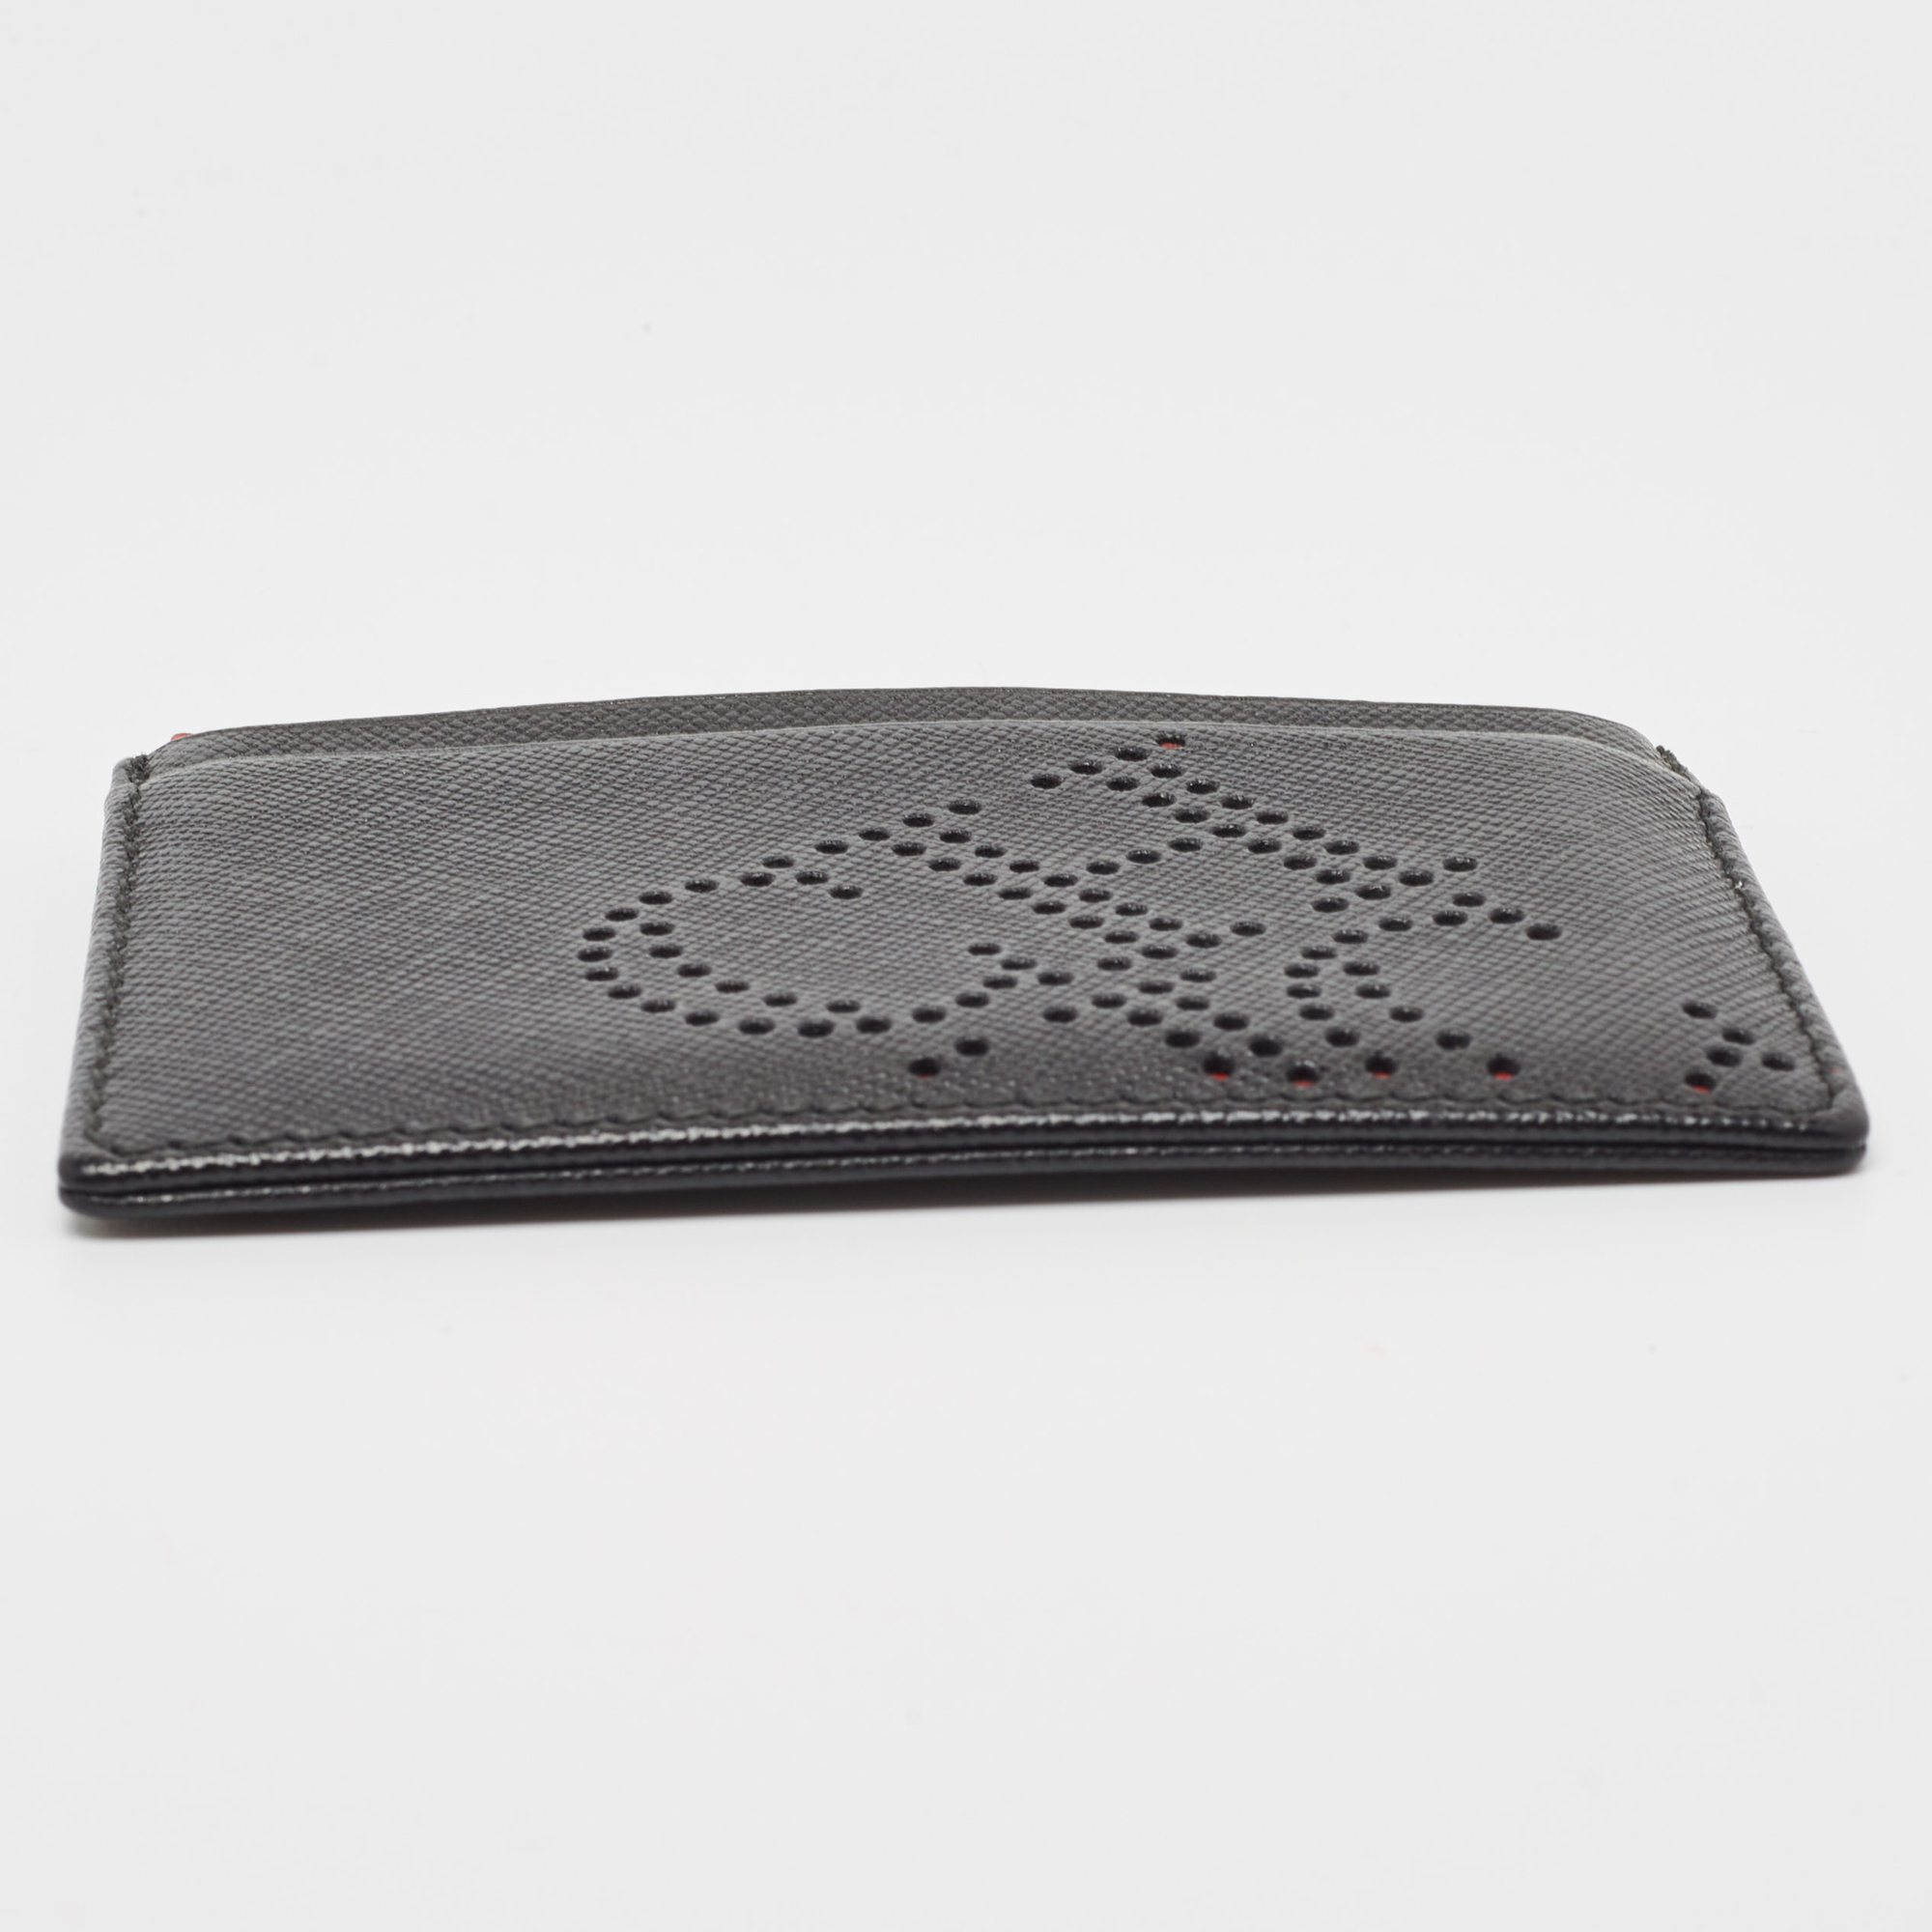 CH Carolina Herrera Black/Red Monogram Perforated Leather Card Holder